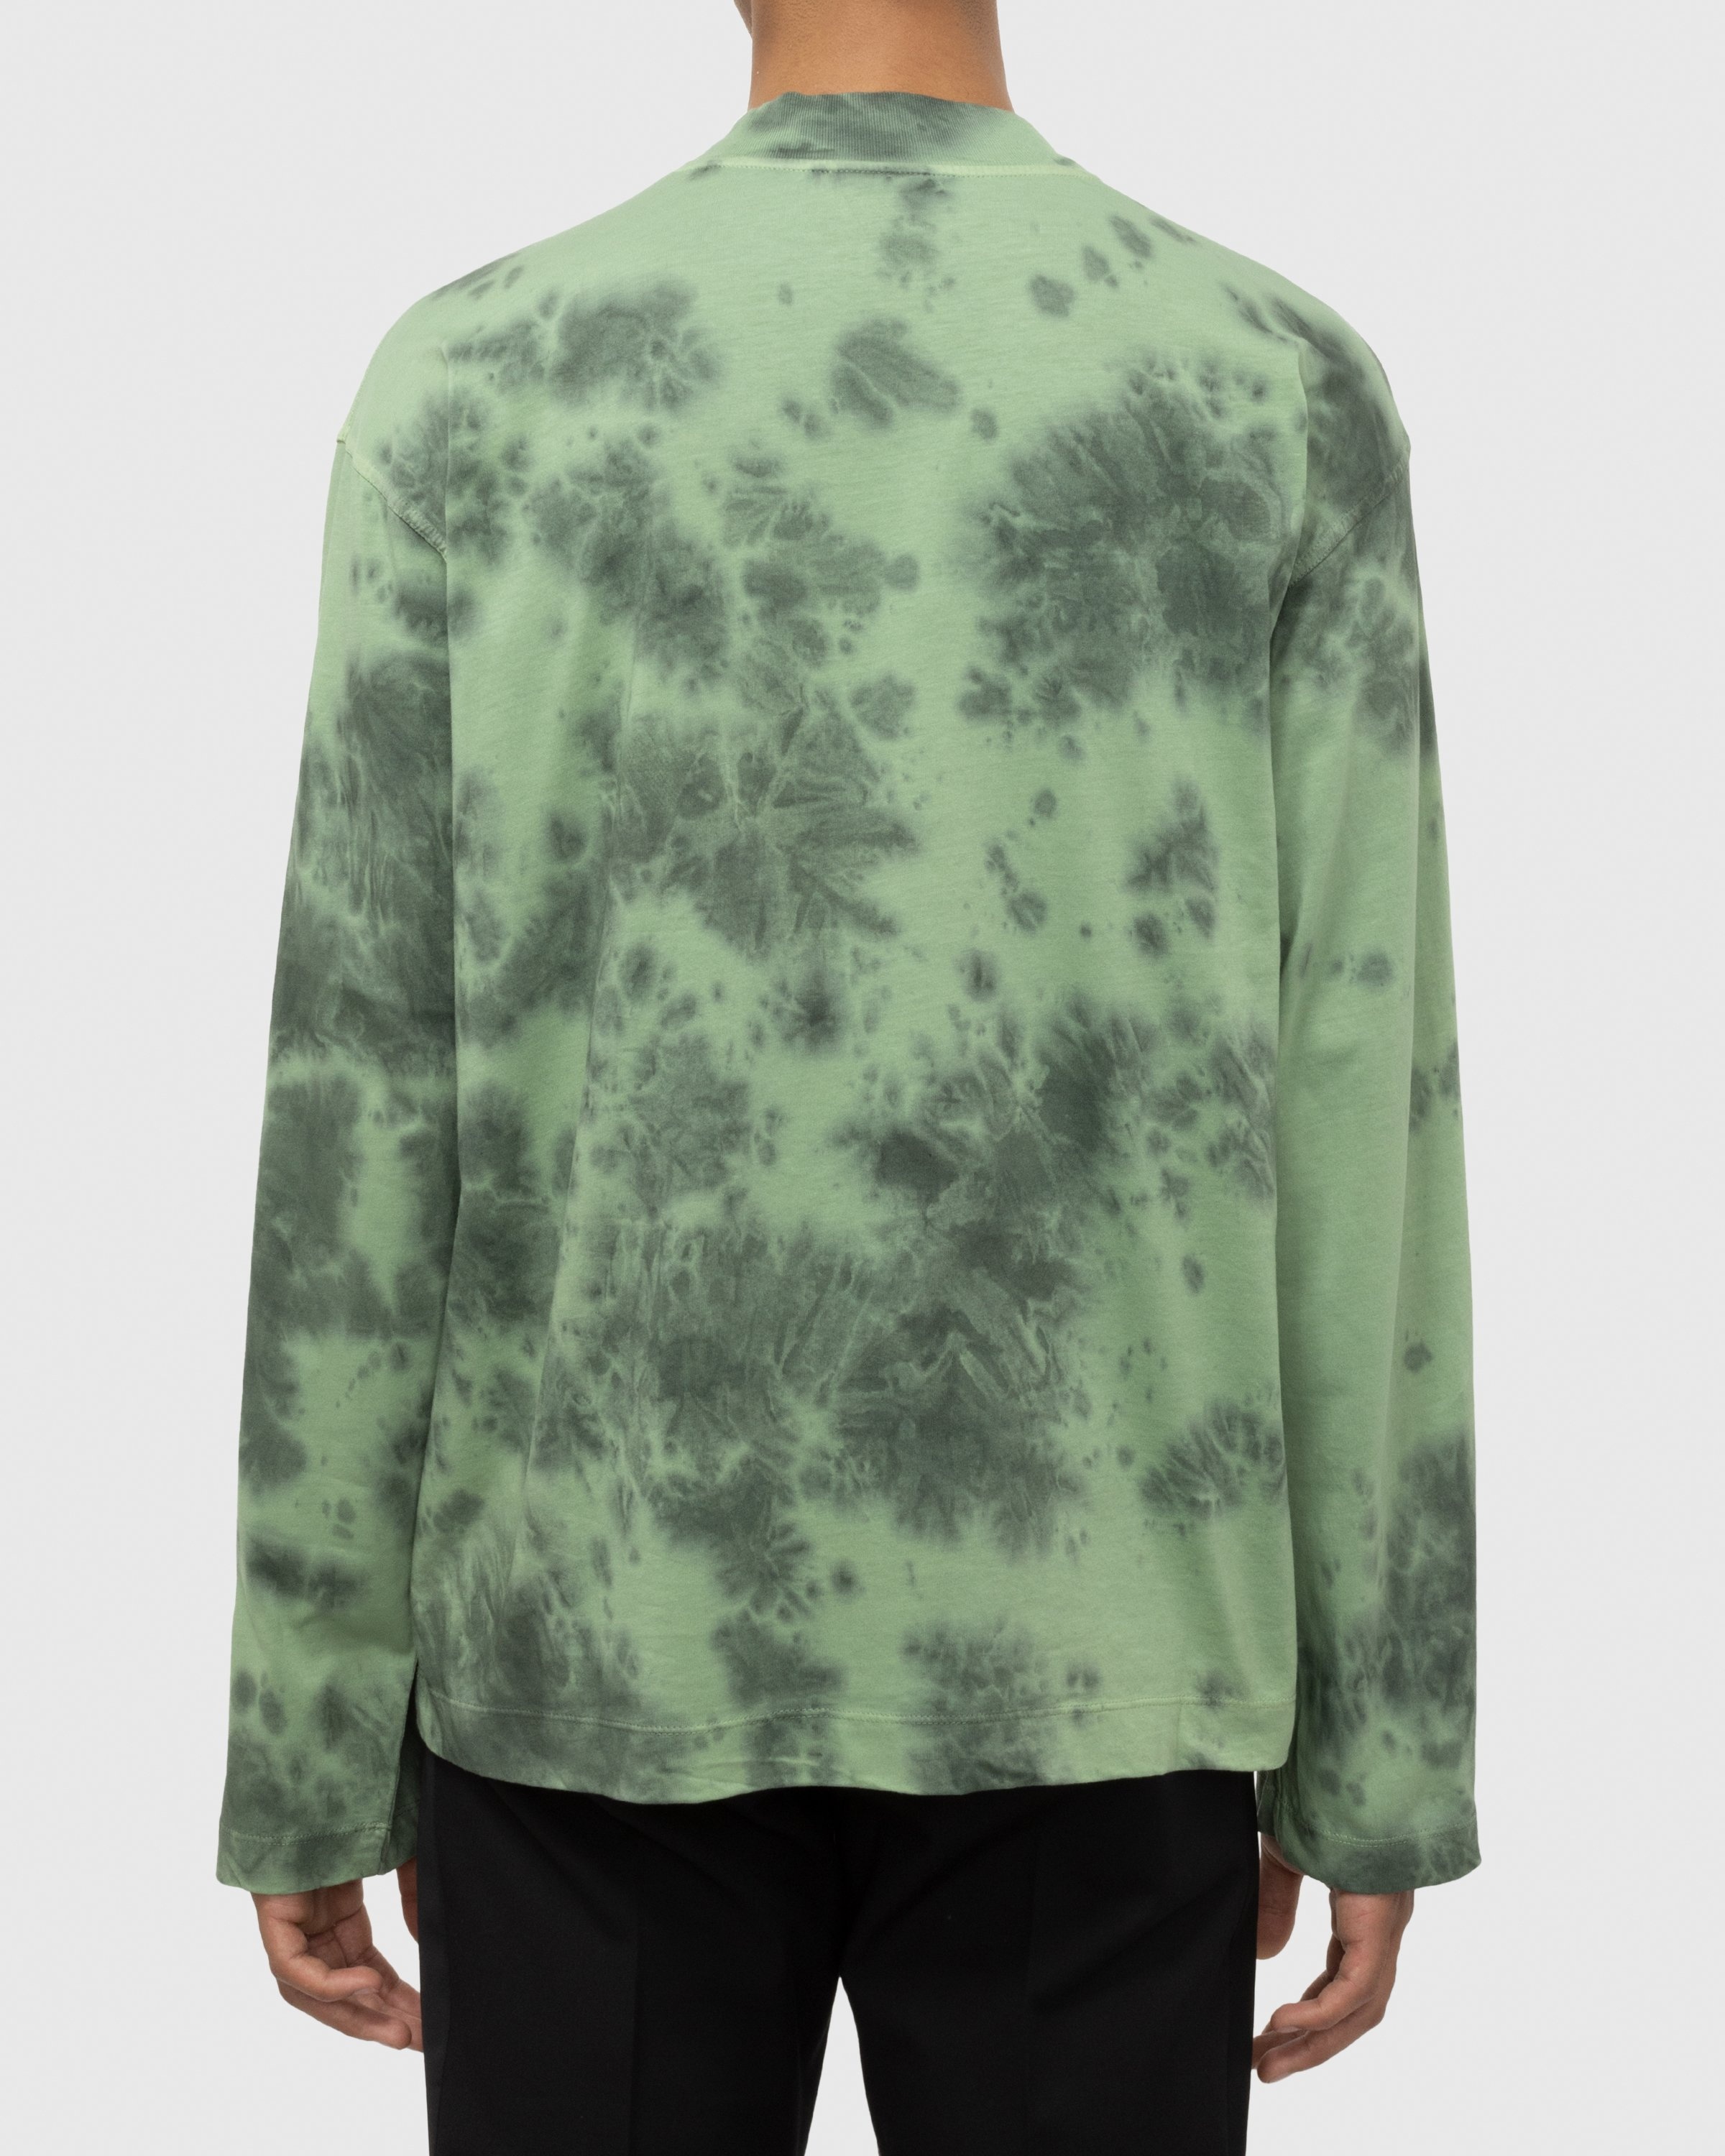 Dries van Noten – Heger T-Shirt Green - Shirts - Green - Image 4